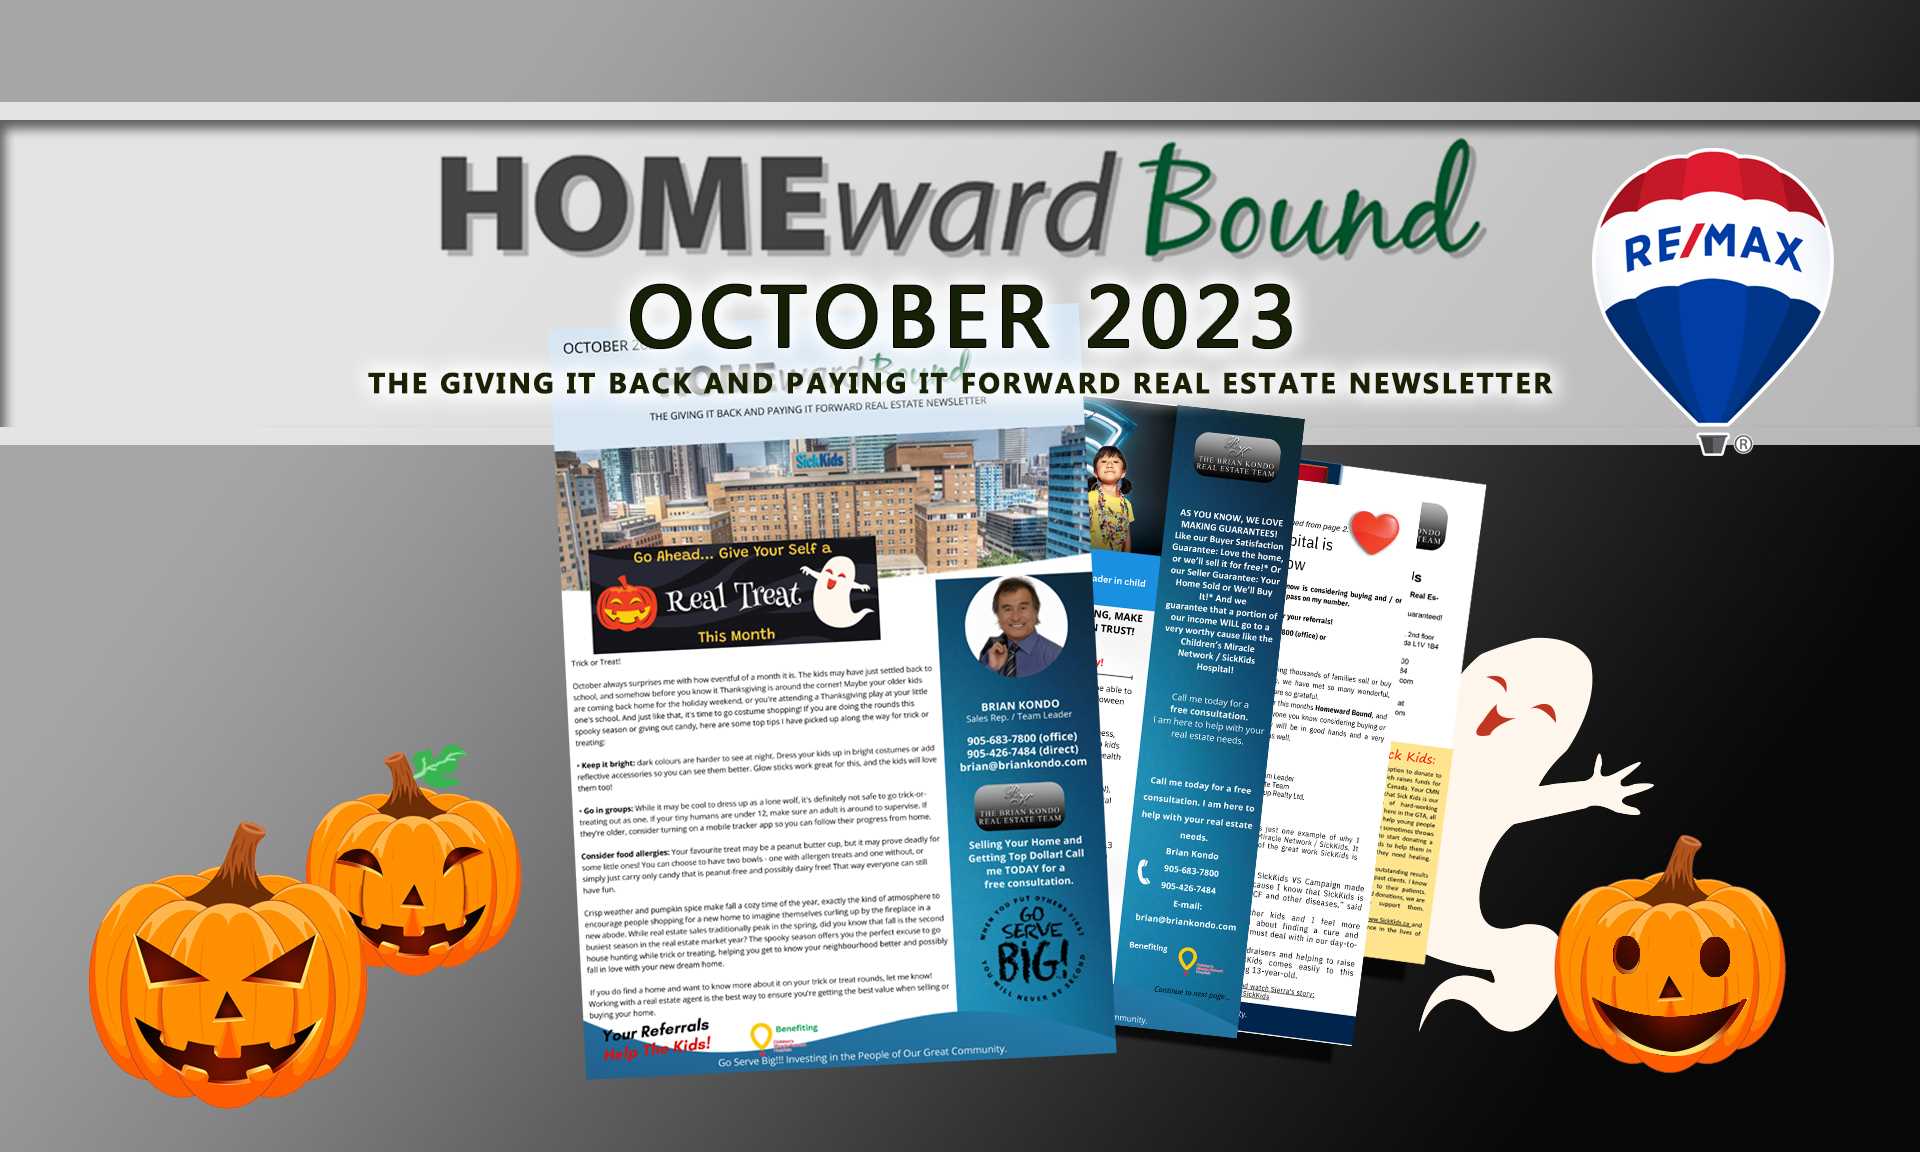 Homeward Bound Newsletter October 2023 | The Brian Kondo Real Estate Team